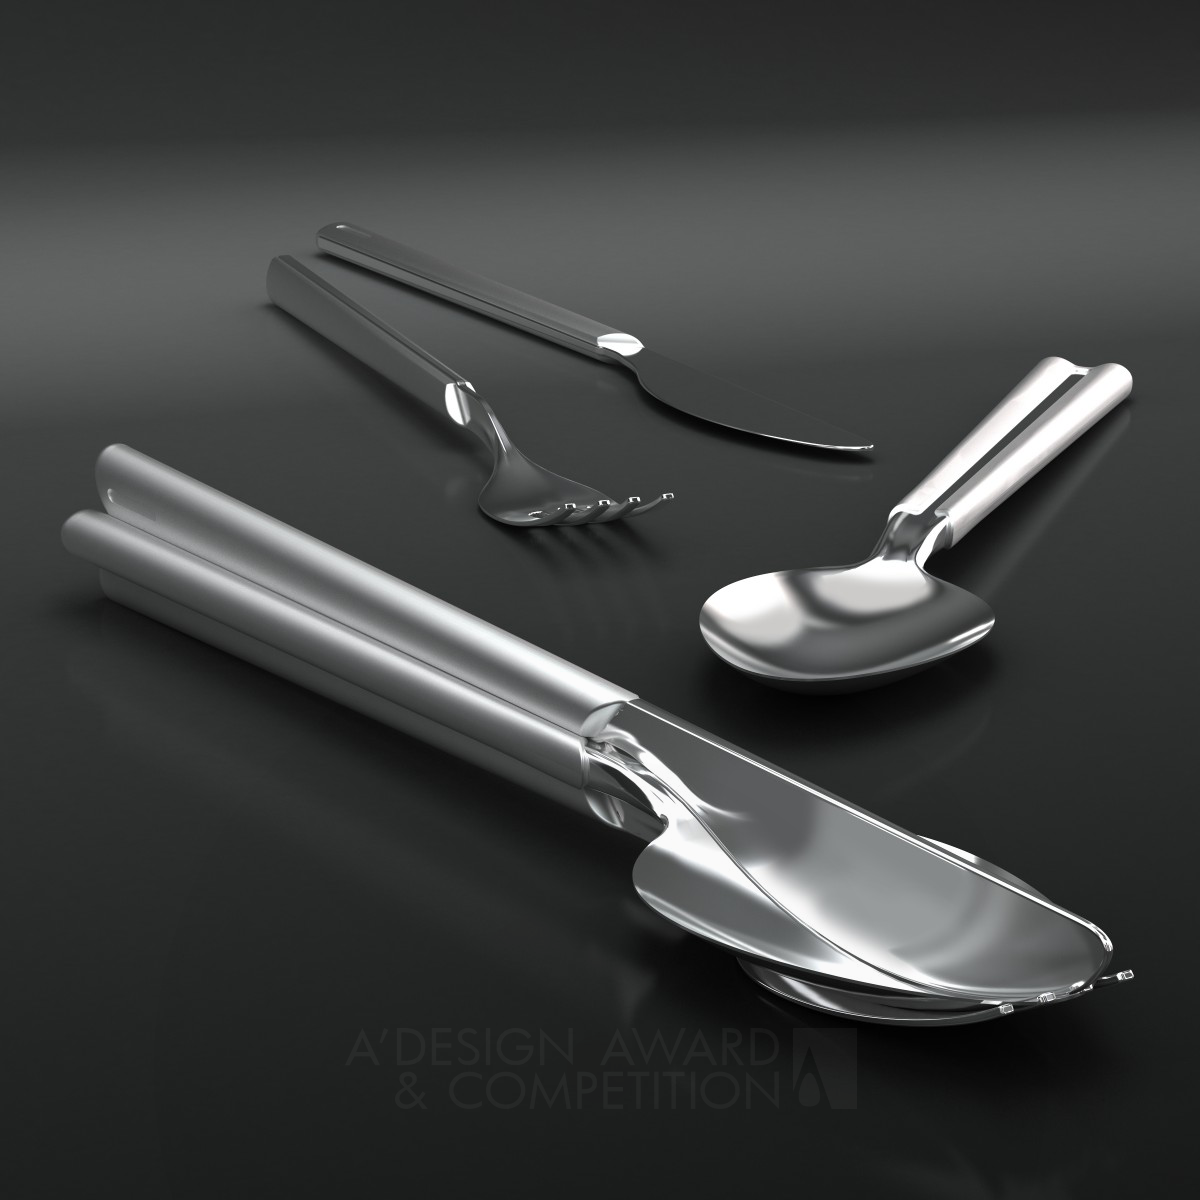 Good Cutlery Set Design